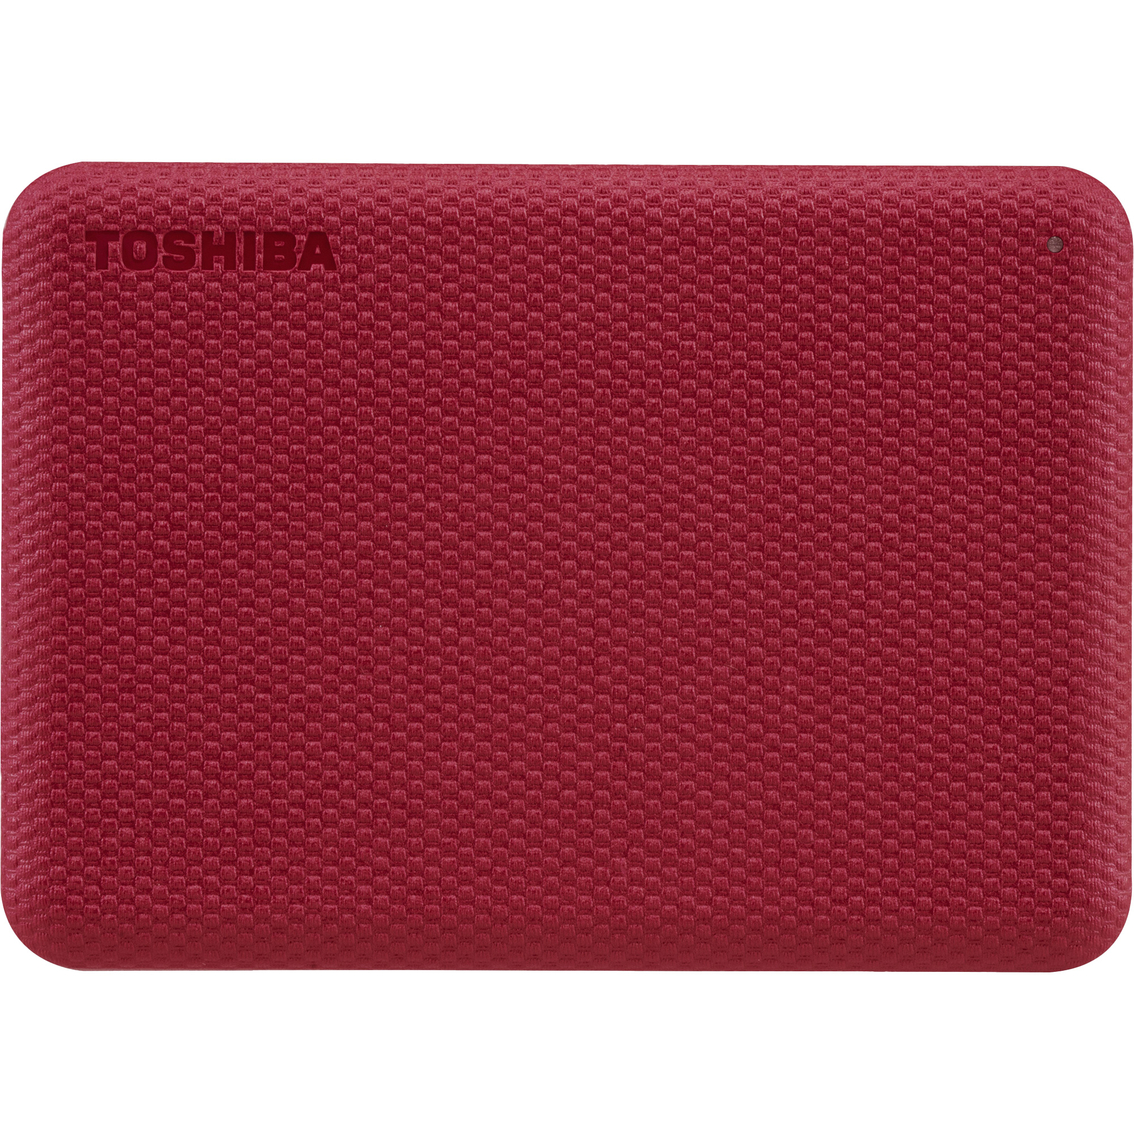 Toshiba Canvio Advance Portable External 2TB Hard Drive - Image 2 of 4